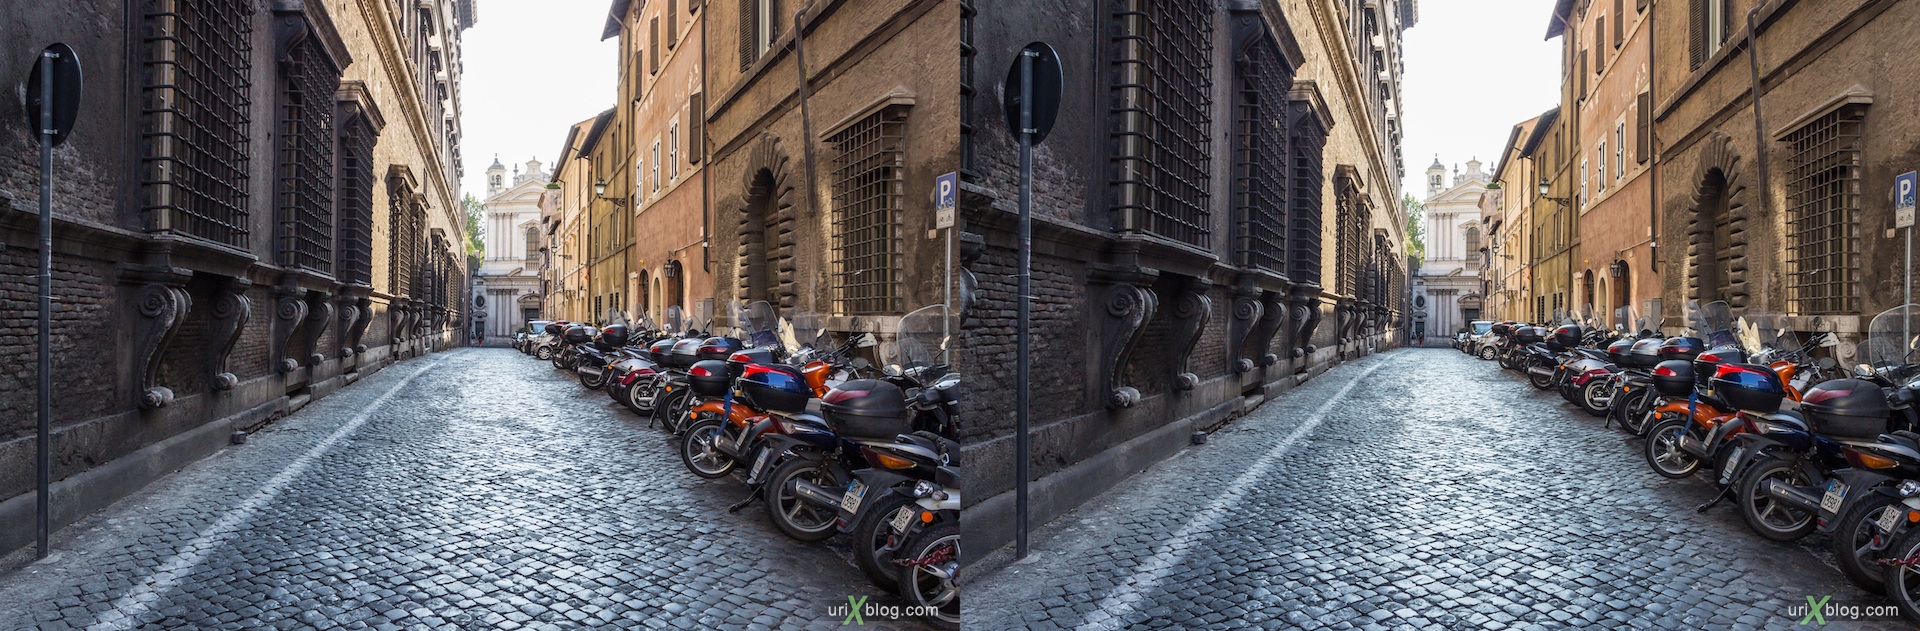 2012, piazza Farnese square, via dei Farnesi street, 3D, stereo pair, cross-eyed, crossview, cross view stereo pair